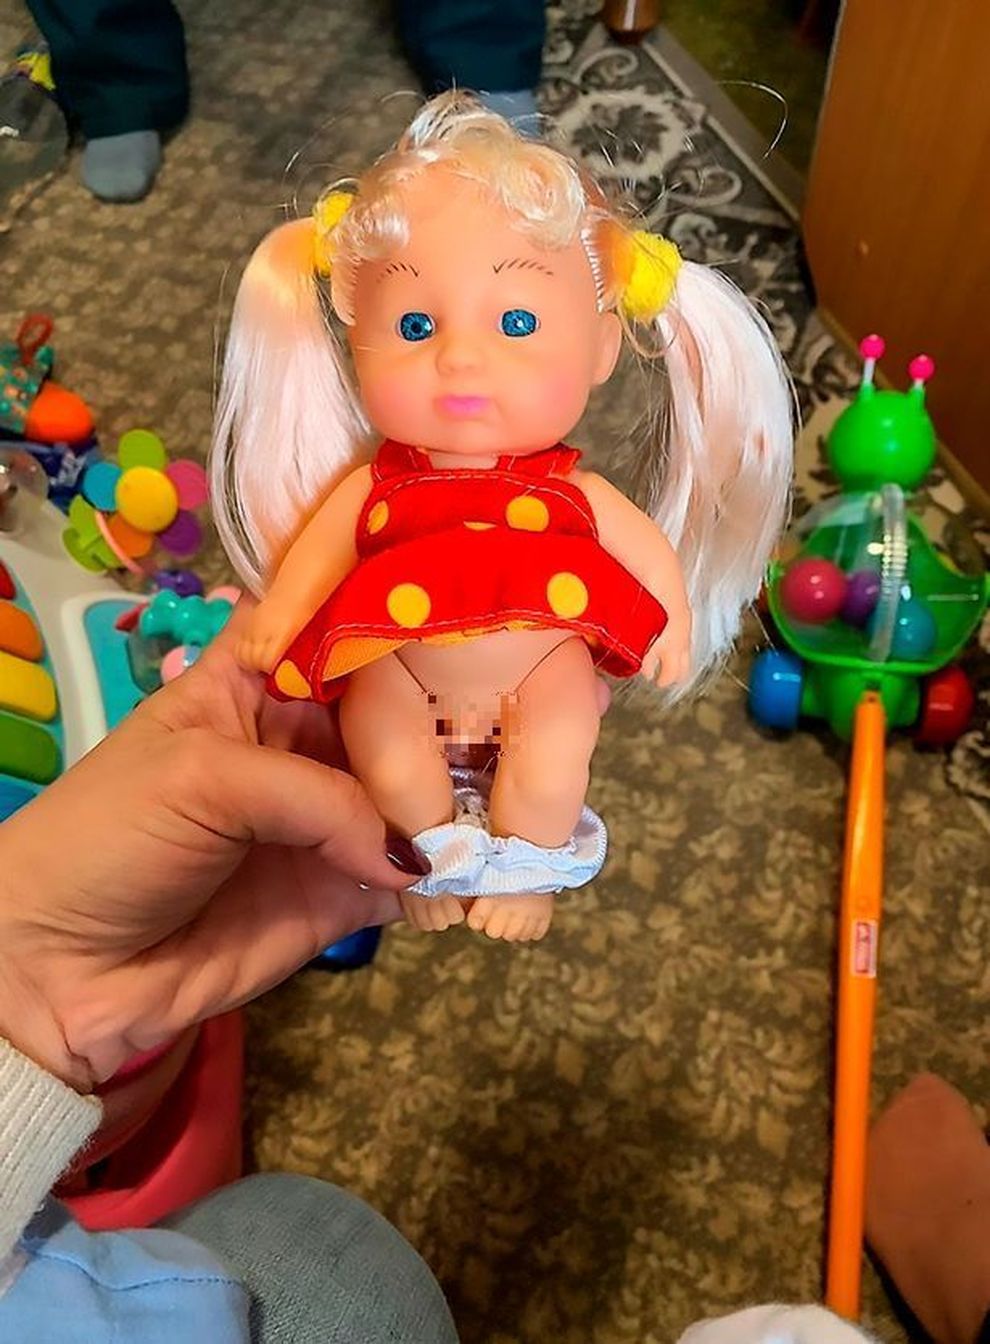 bambole usate in vendita